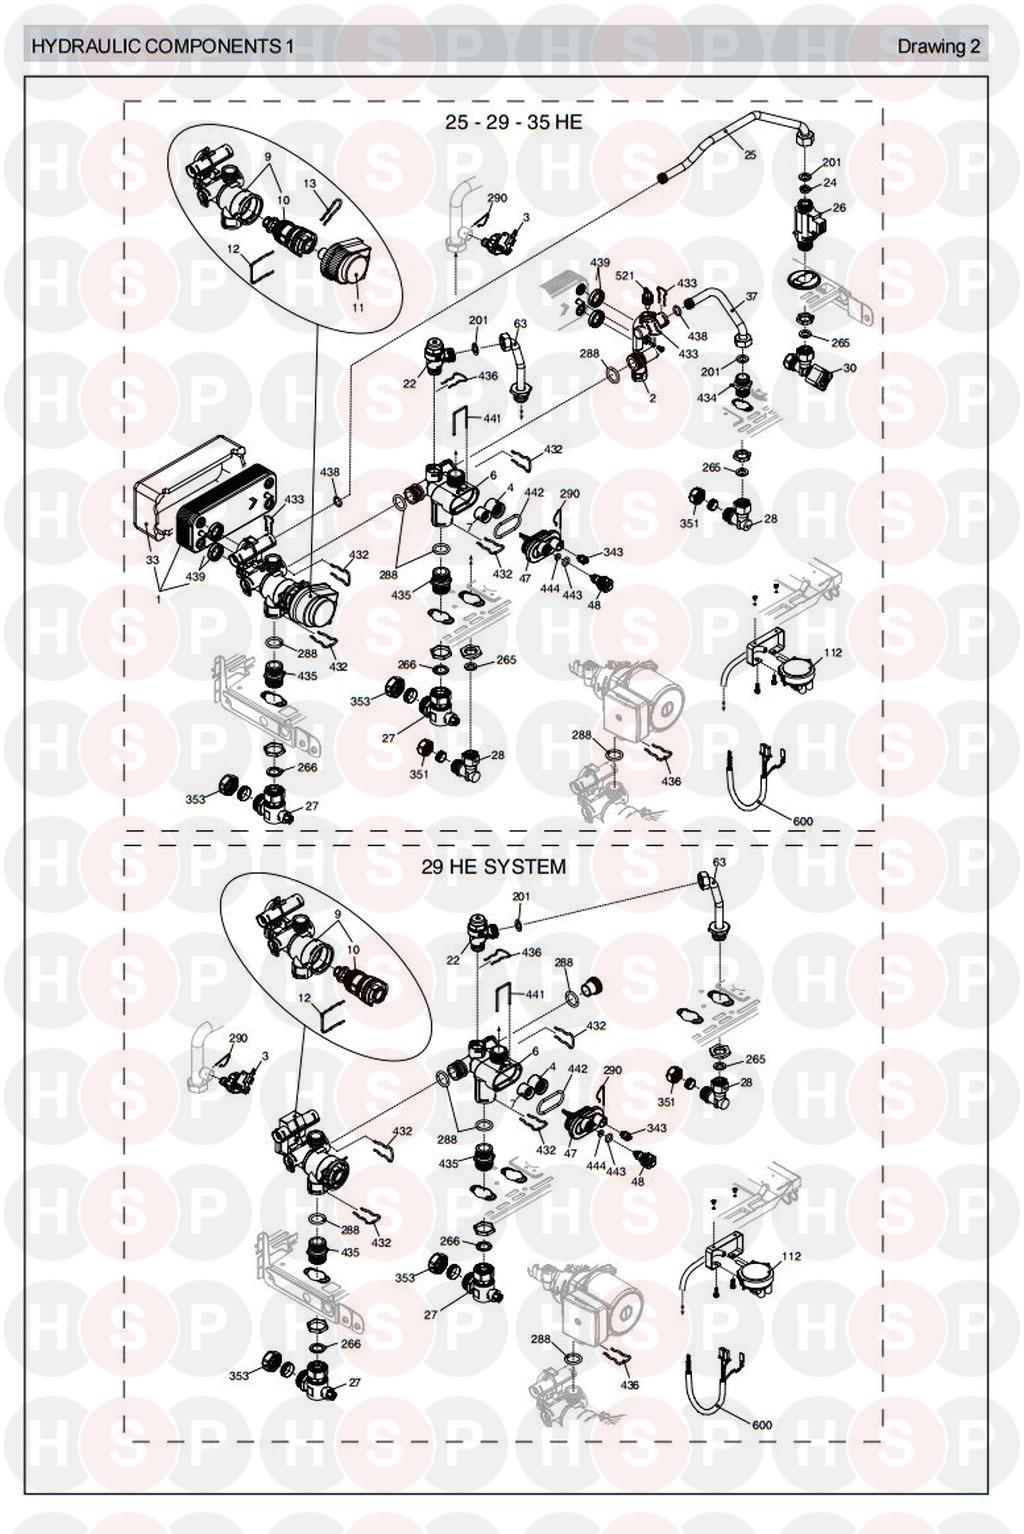 Hydraulics 1 diagram for Vokera Sabre 25 HE Rev 6 (11/2010)